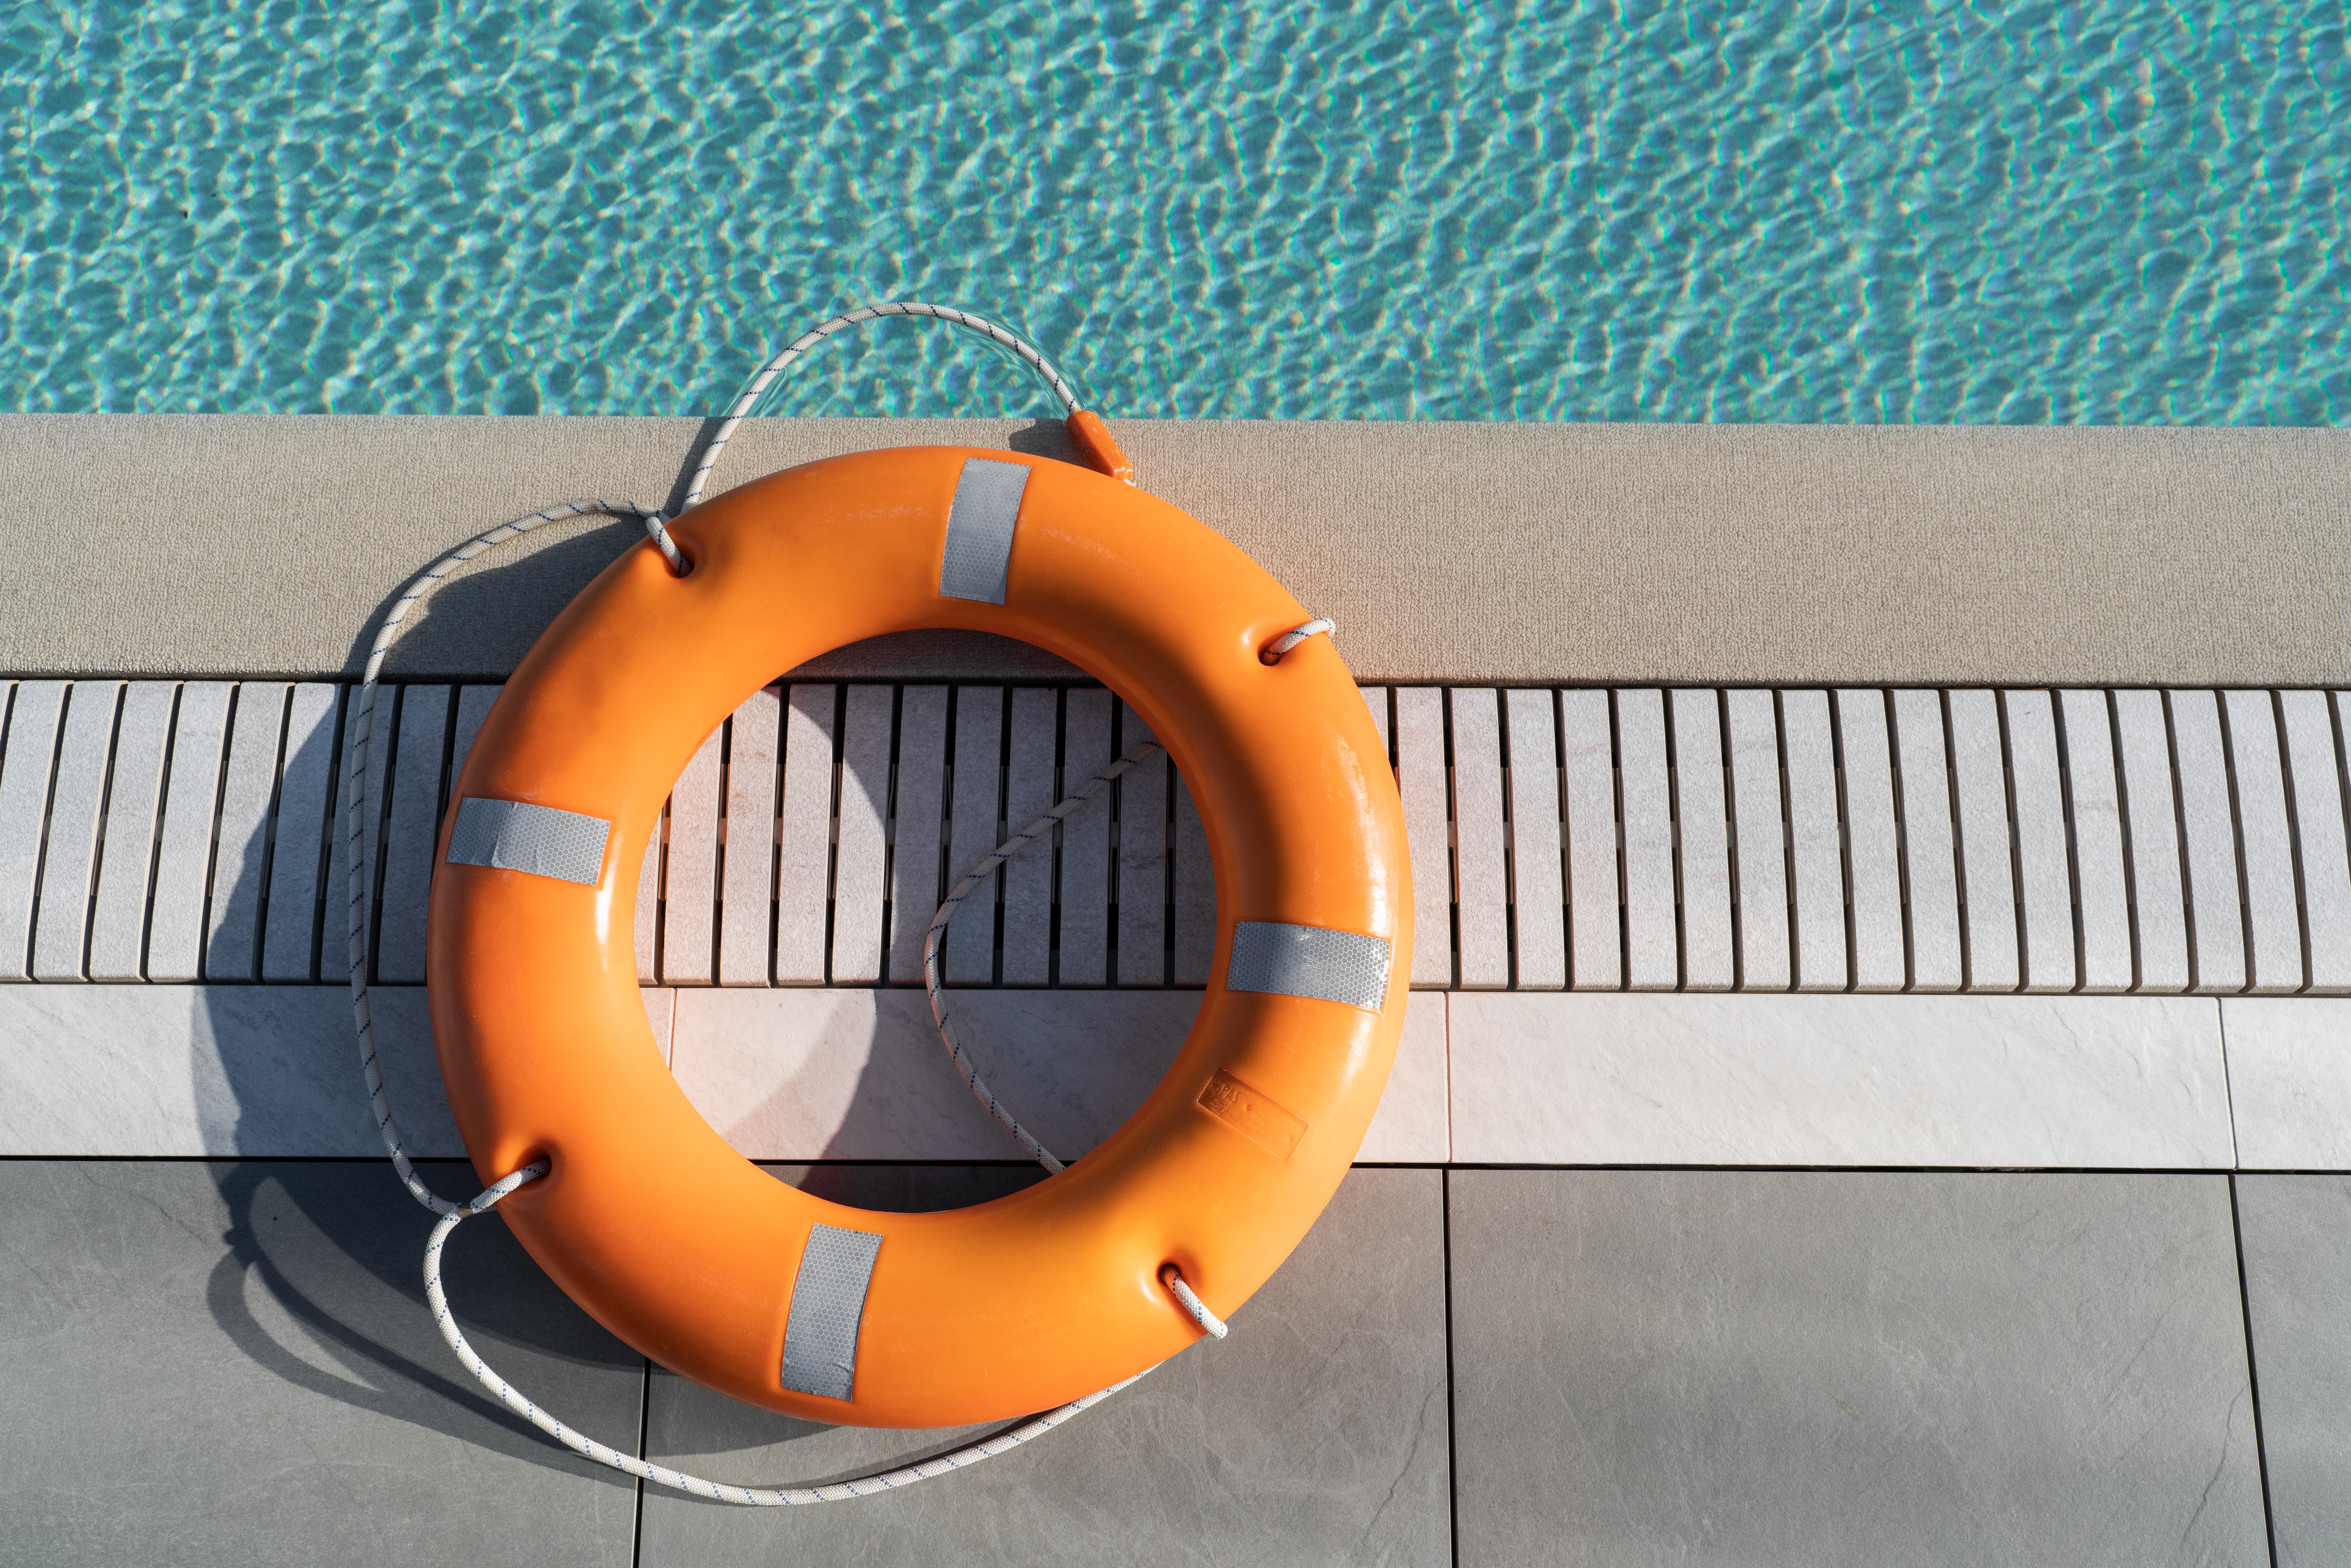 Orange lifebuoy by the pool. Lifebuoy, rescue concept